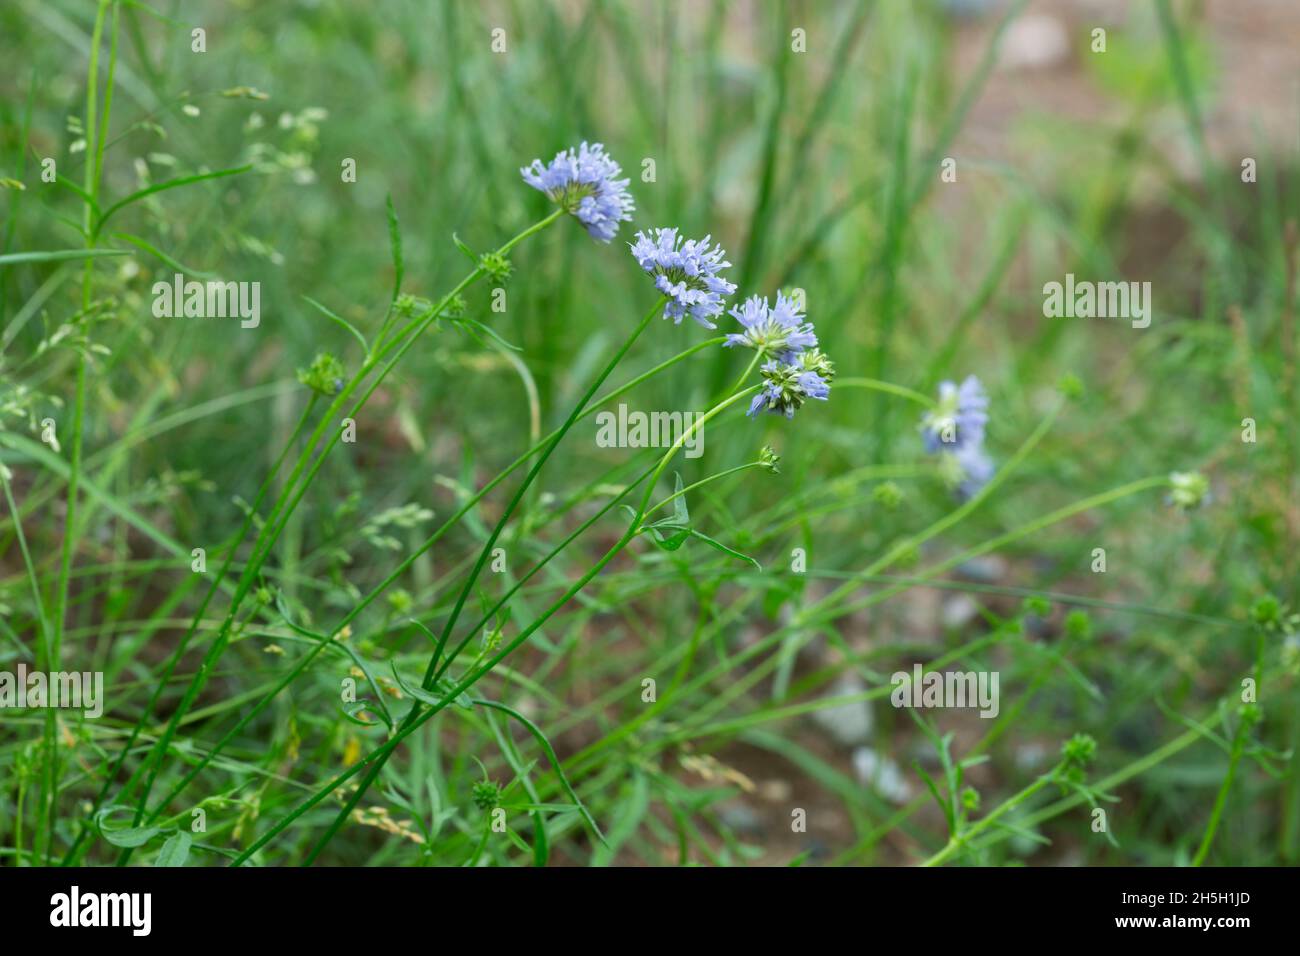 Blooming gilia plants among vegetation Stock Photo